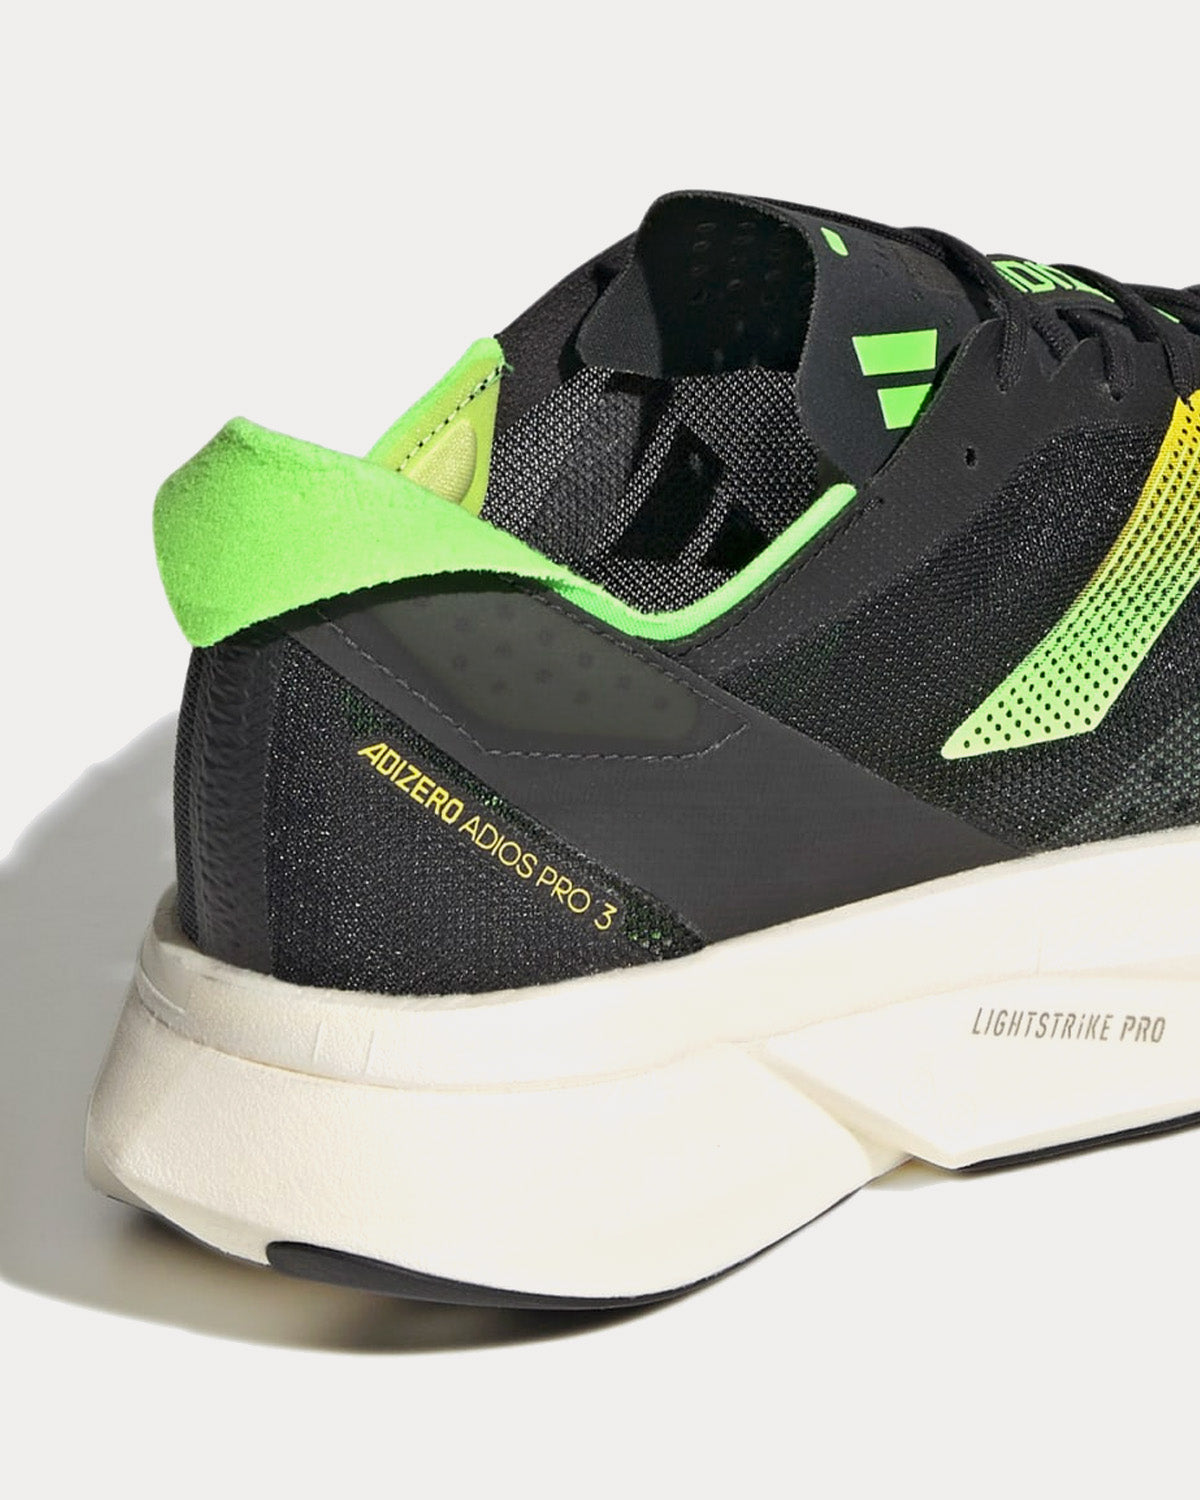 Adidas - Adizero Adios Pro 3 Core Black / Beam Yellow / Solar Green Running Shoes